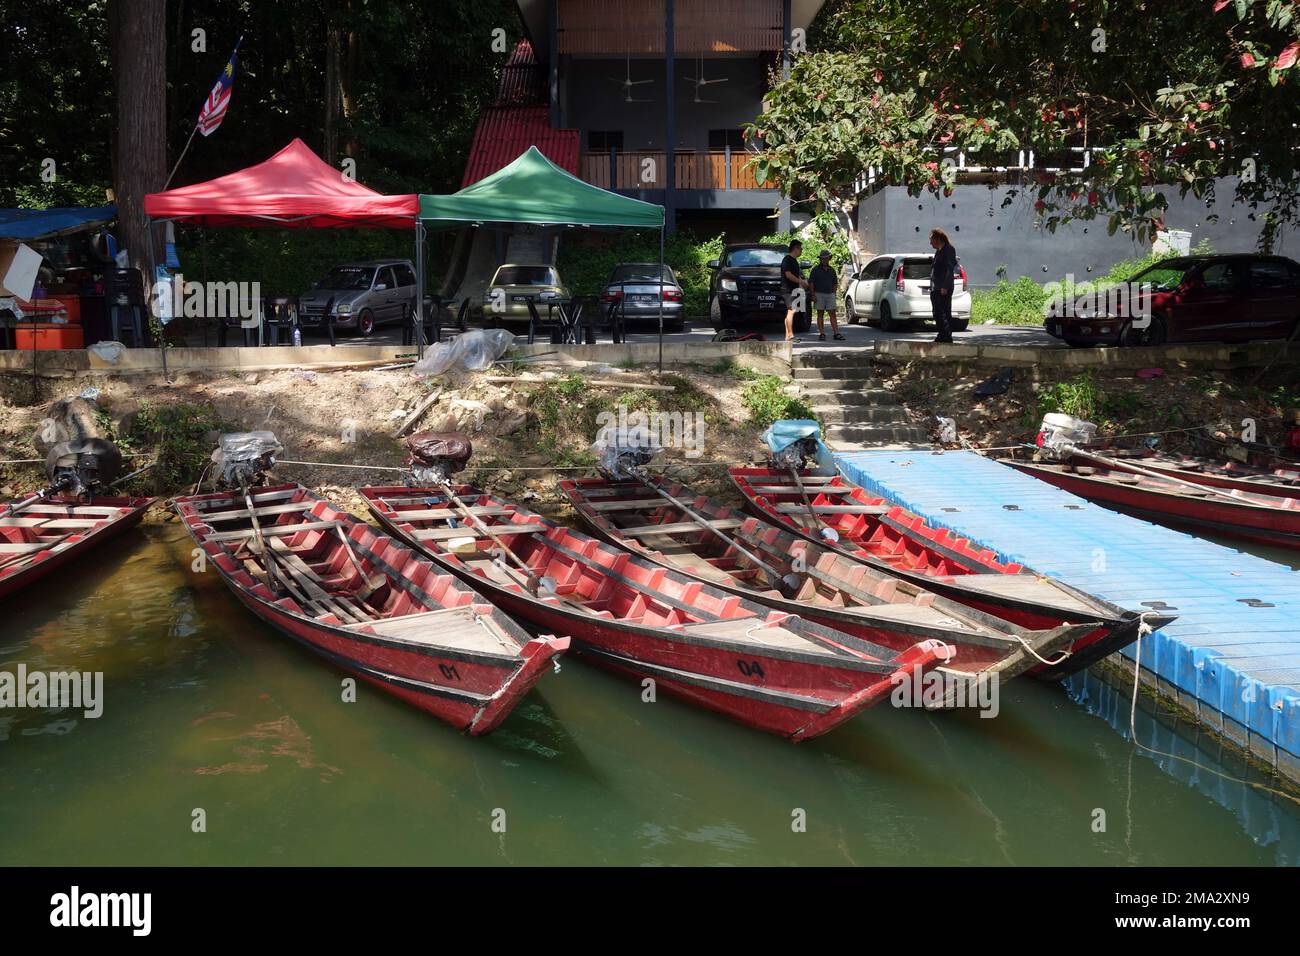 Wooden boats for hire, Ulu Muda, Malaysia. No MR o rPR Stock Photo